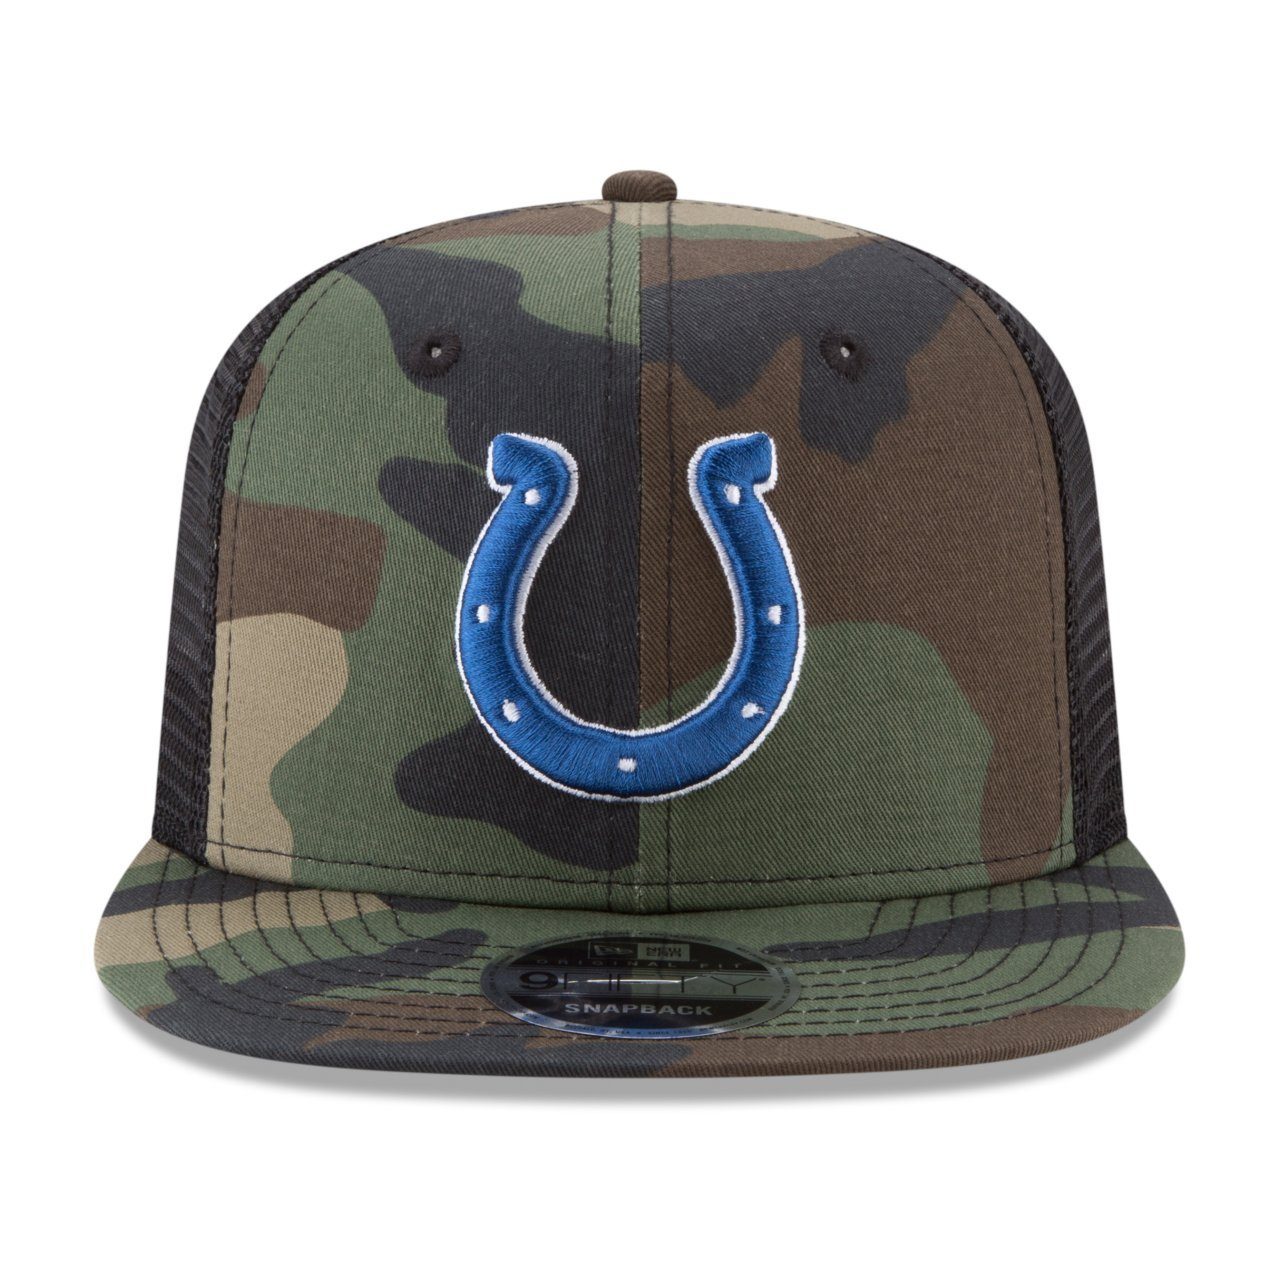 New Era Snapback Cap 9Fifty Colts Indianapolis